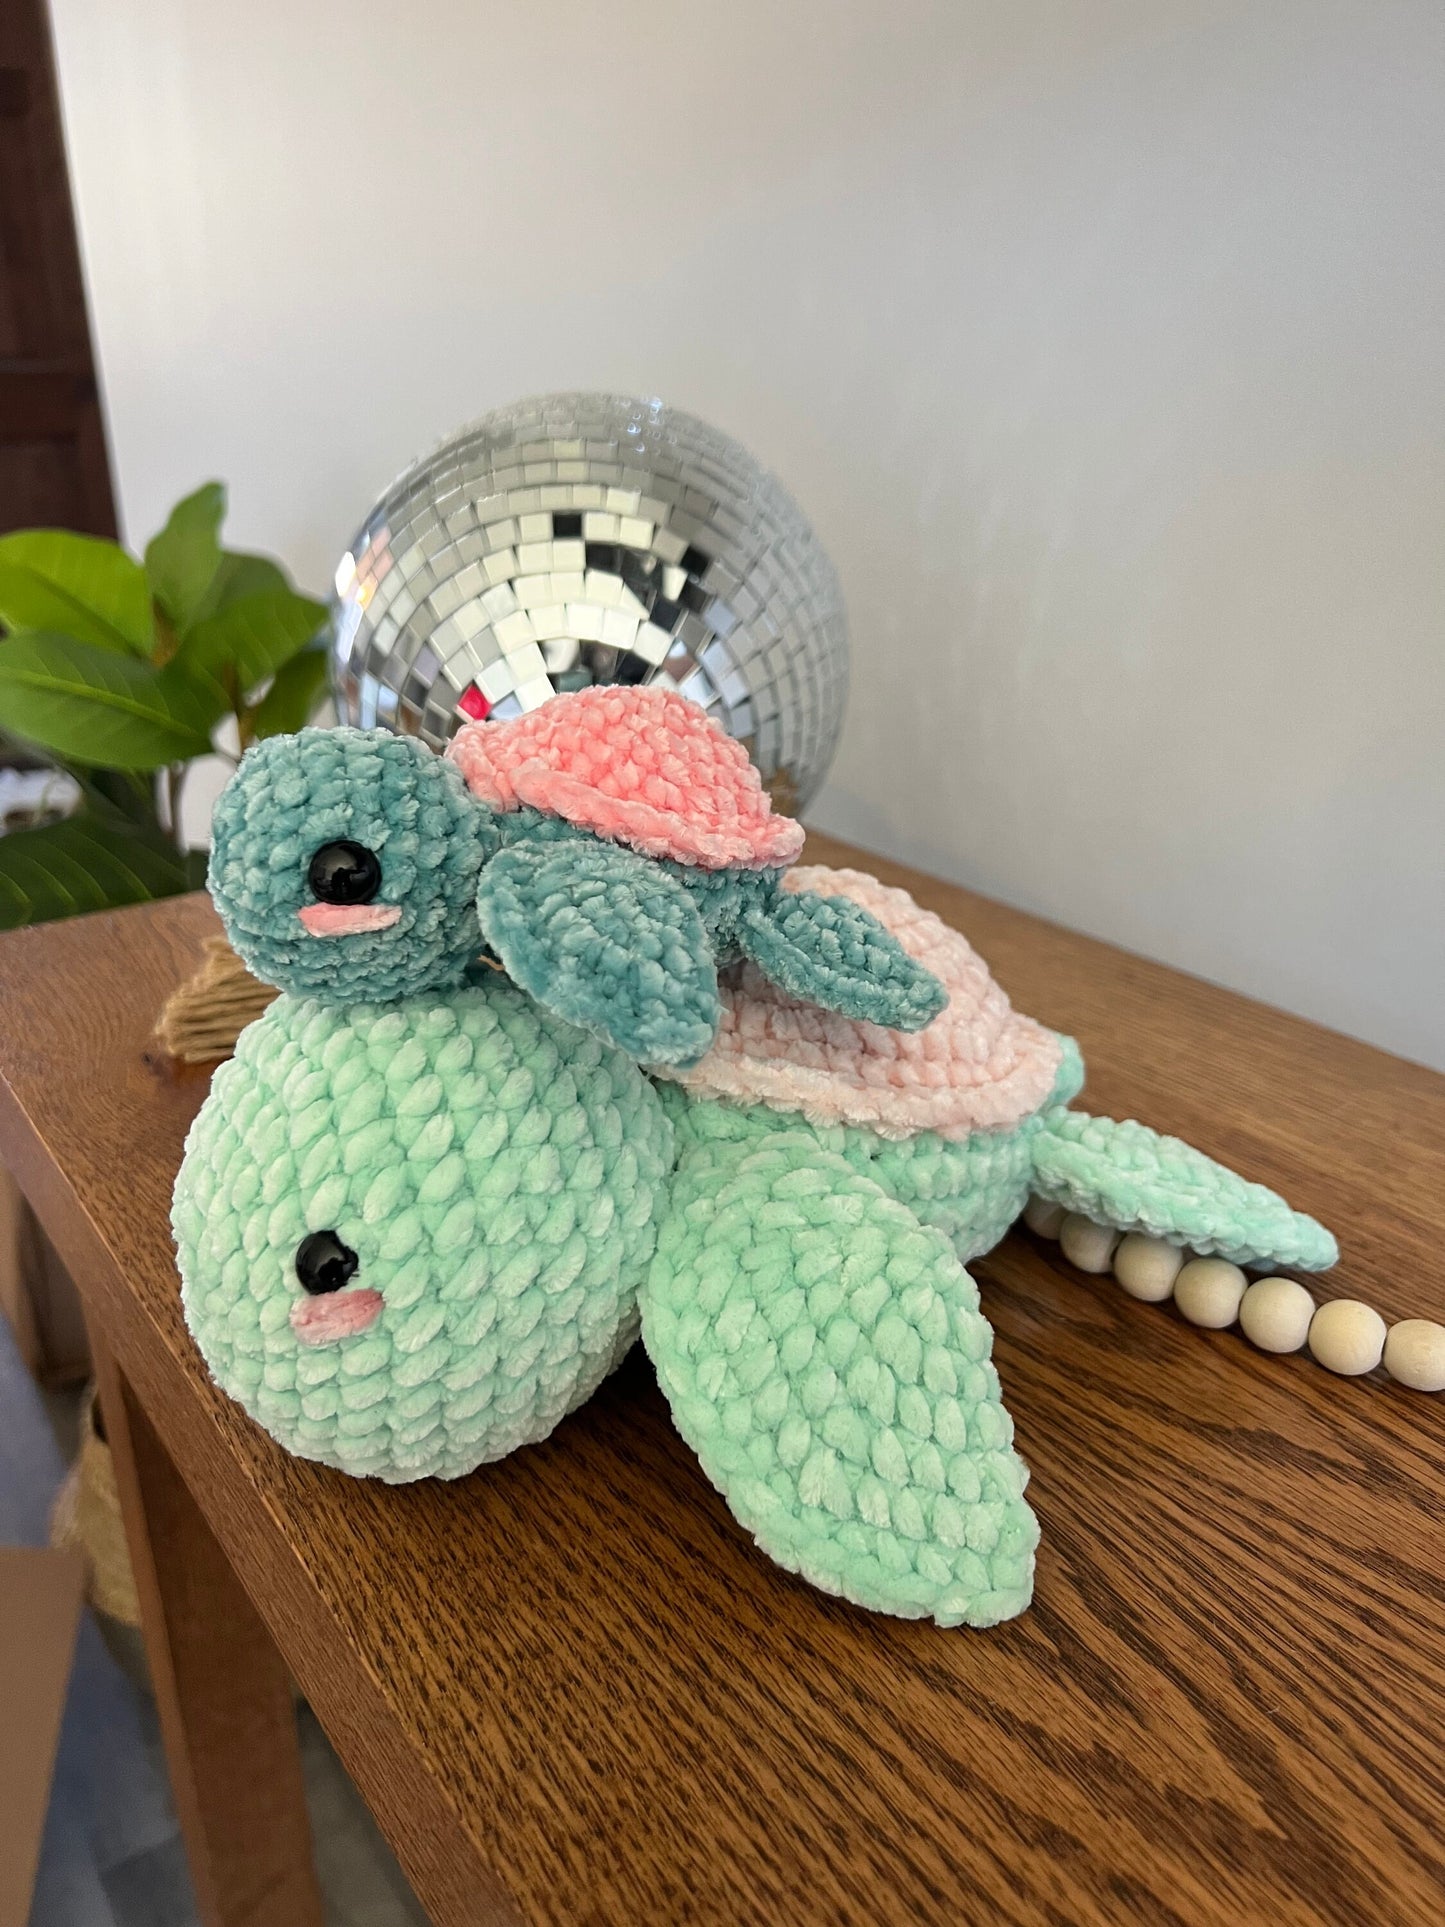 BUNDLE Regular & Mini Turtle Crochet Patterns